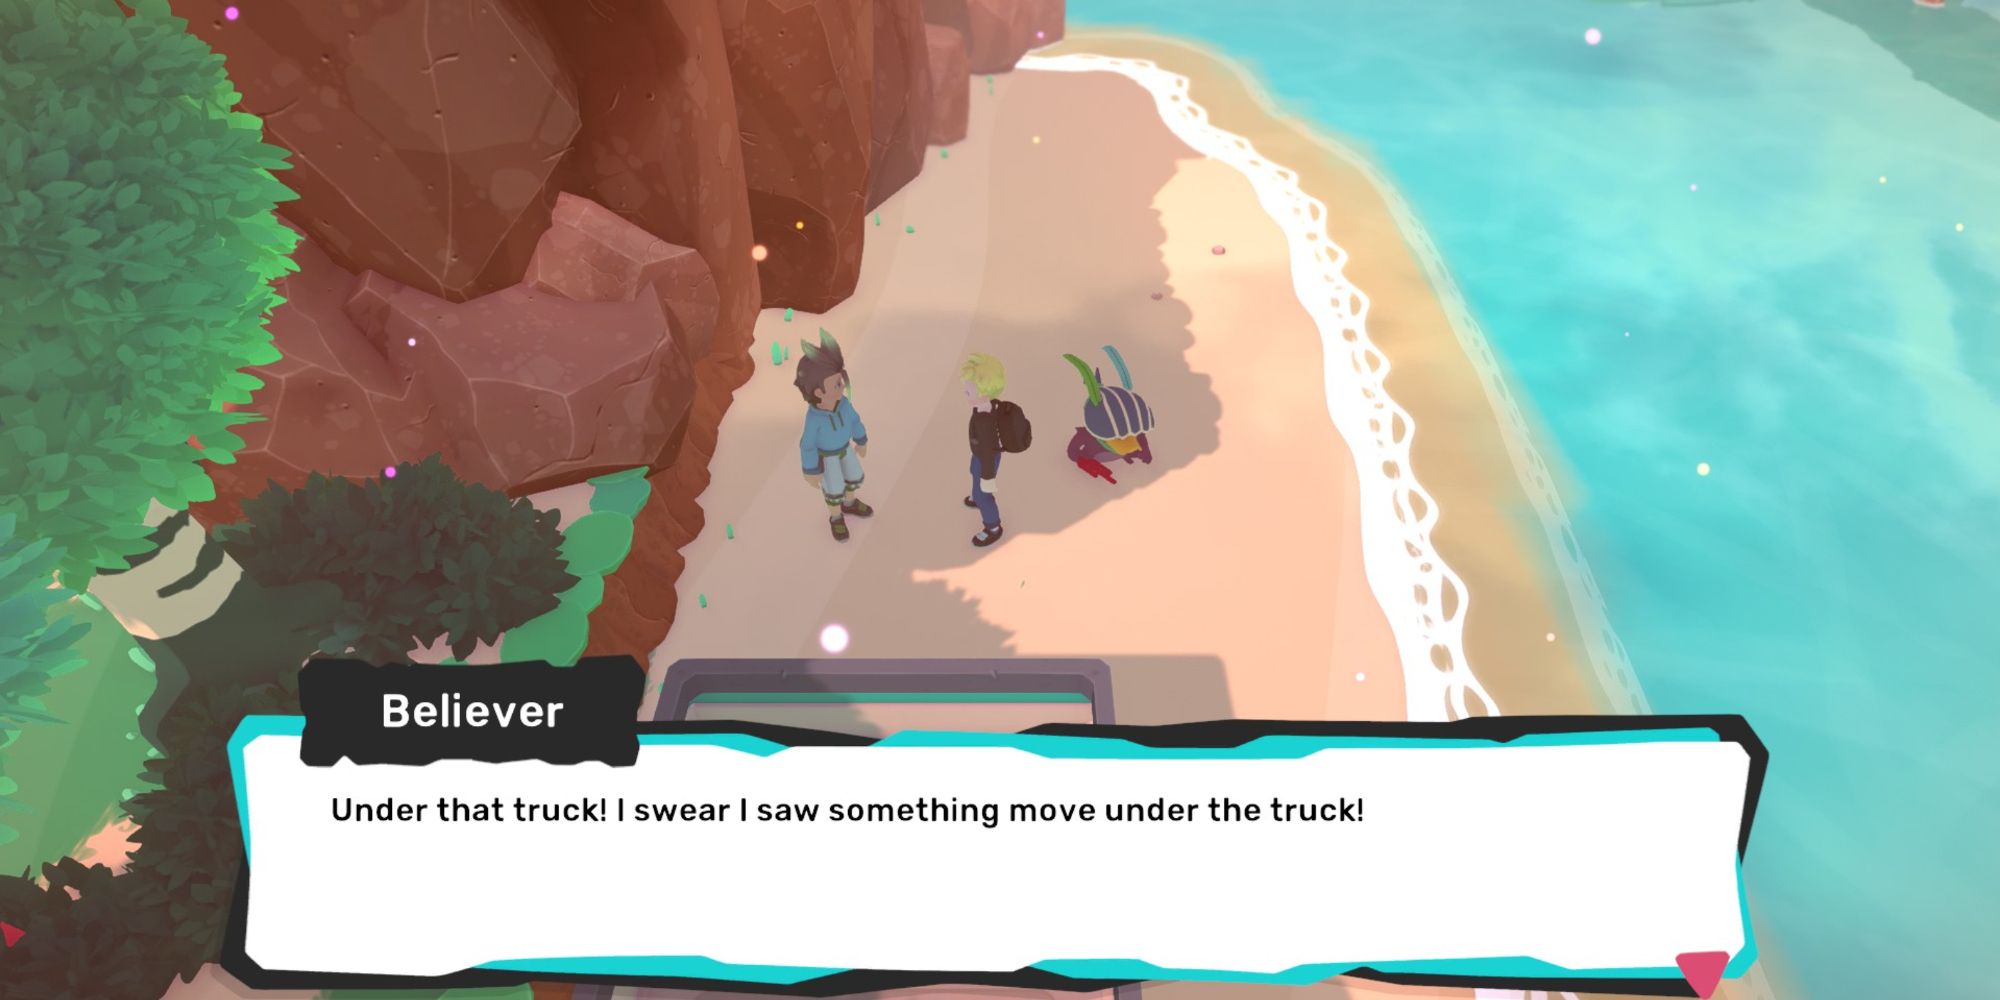 Temtem Pokemon Reference swears it's under that truck